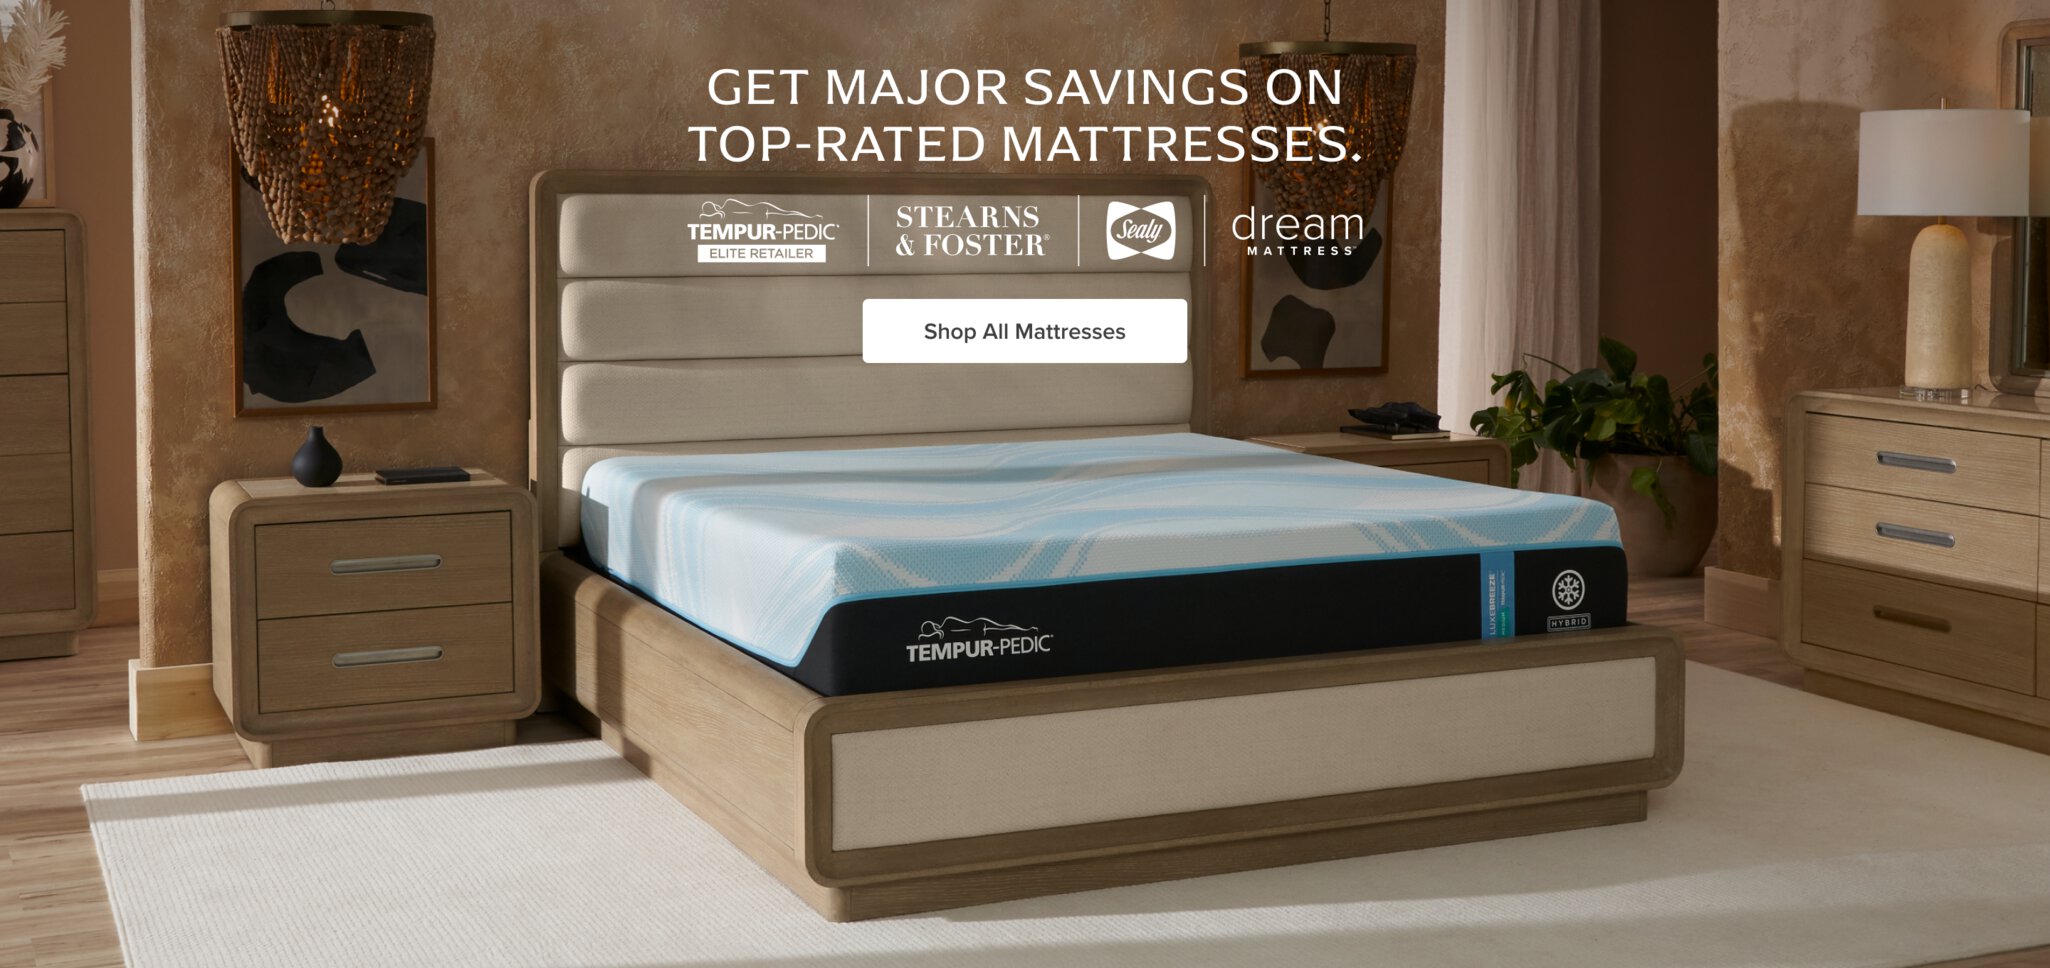 Get major savings on top-rated mattresses.